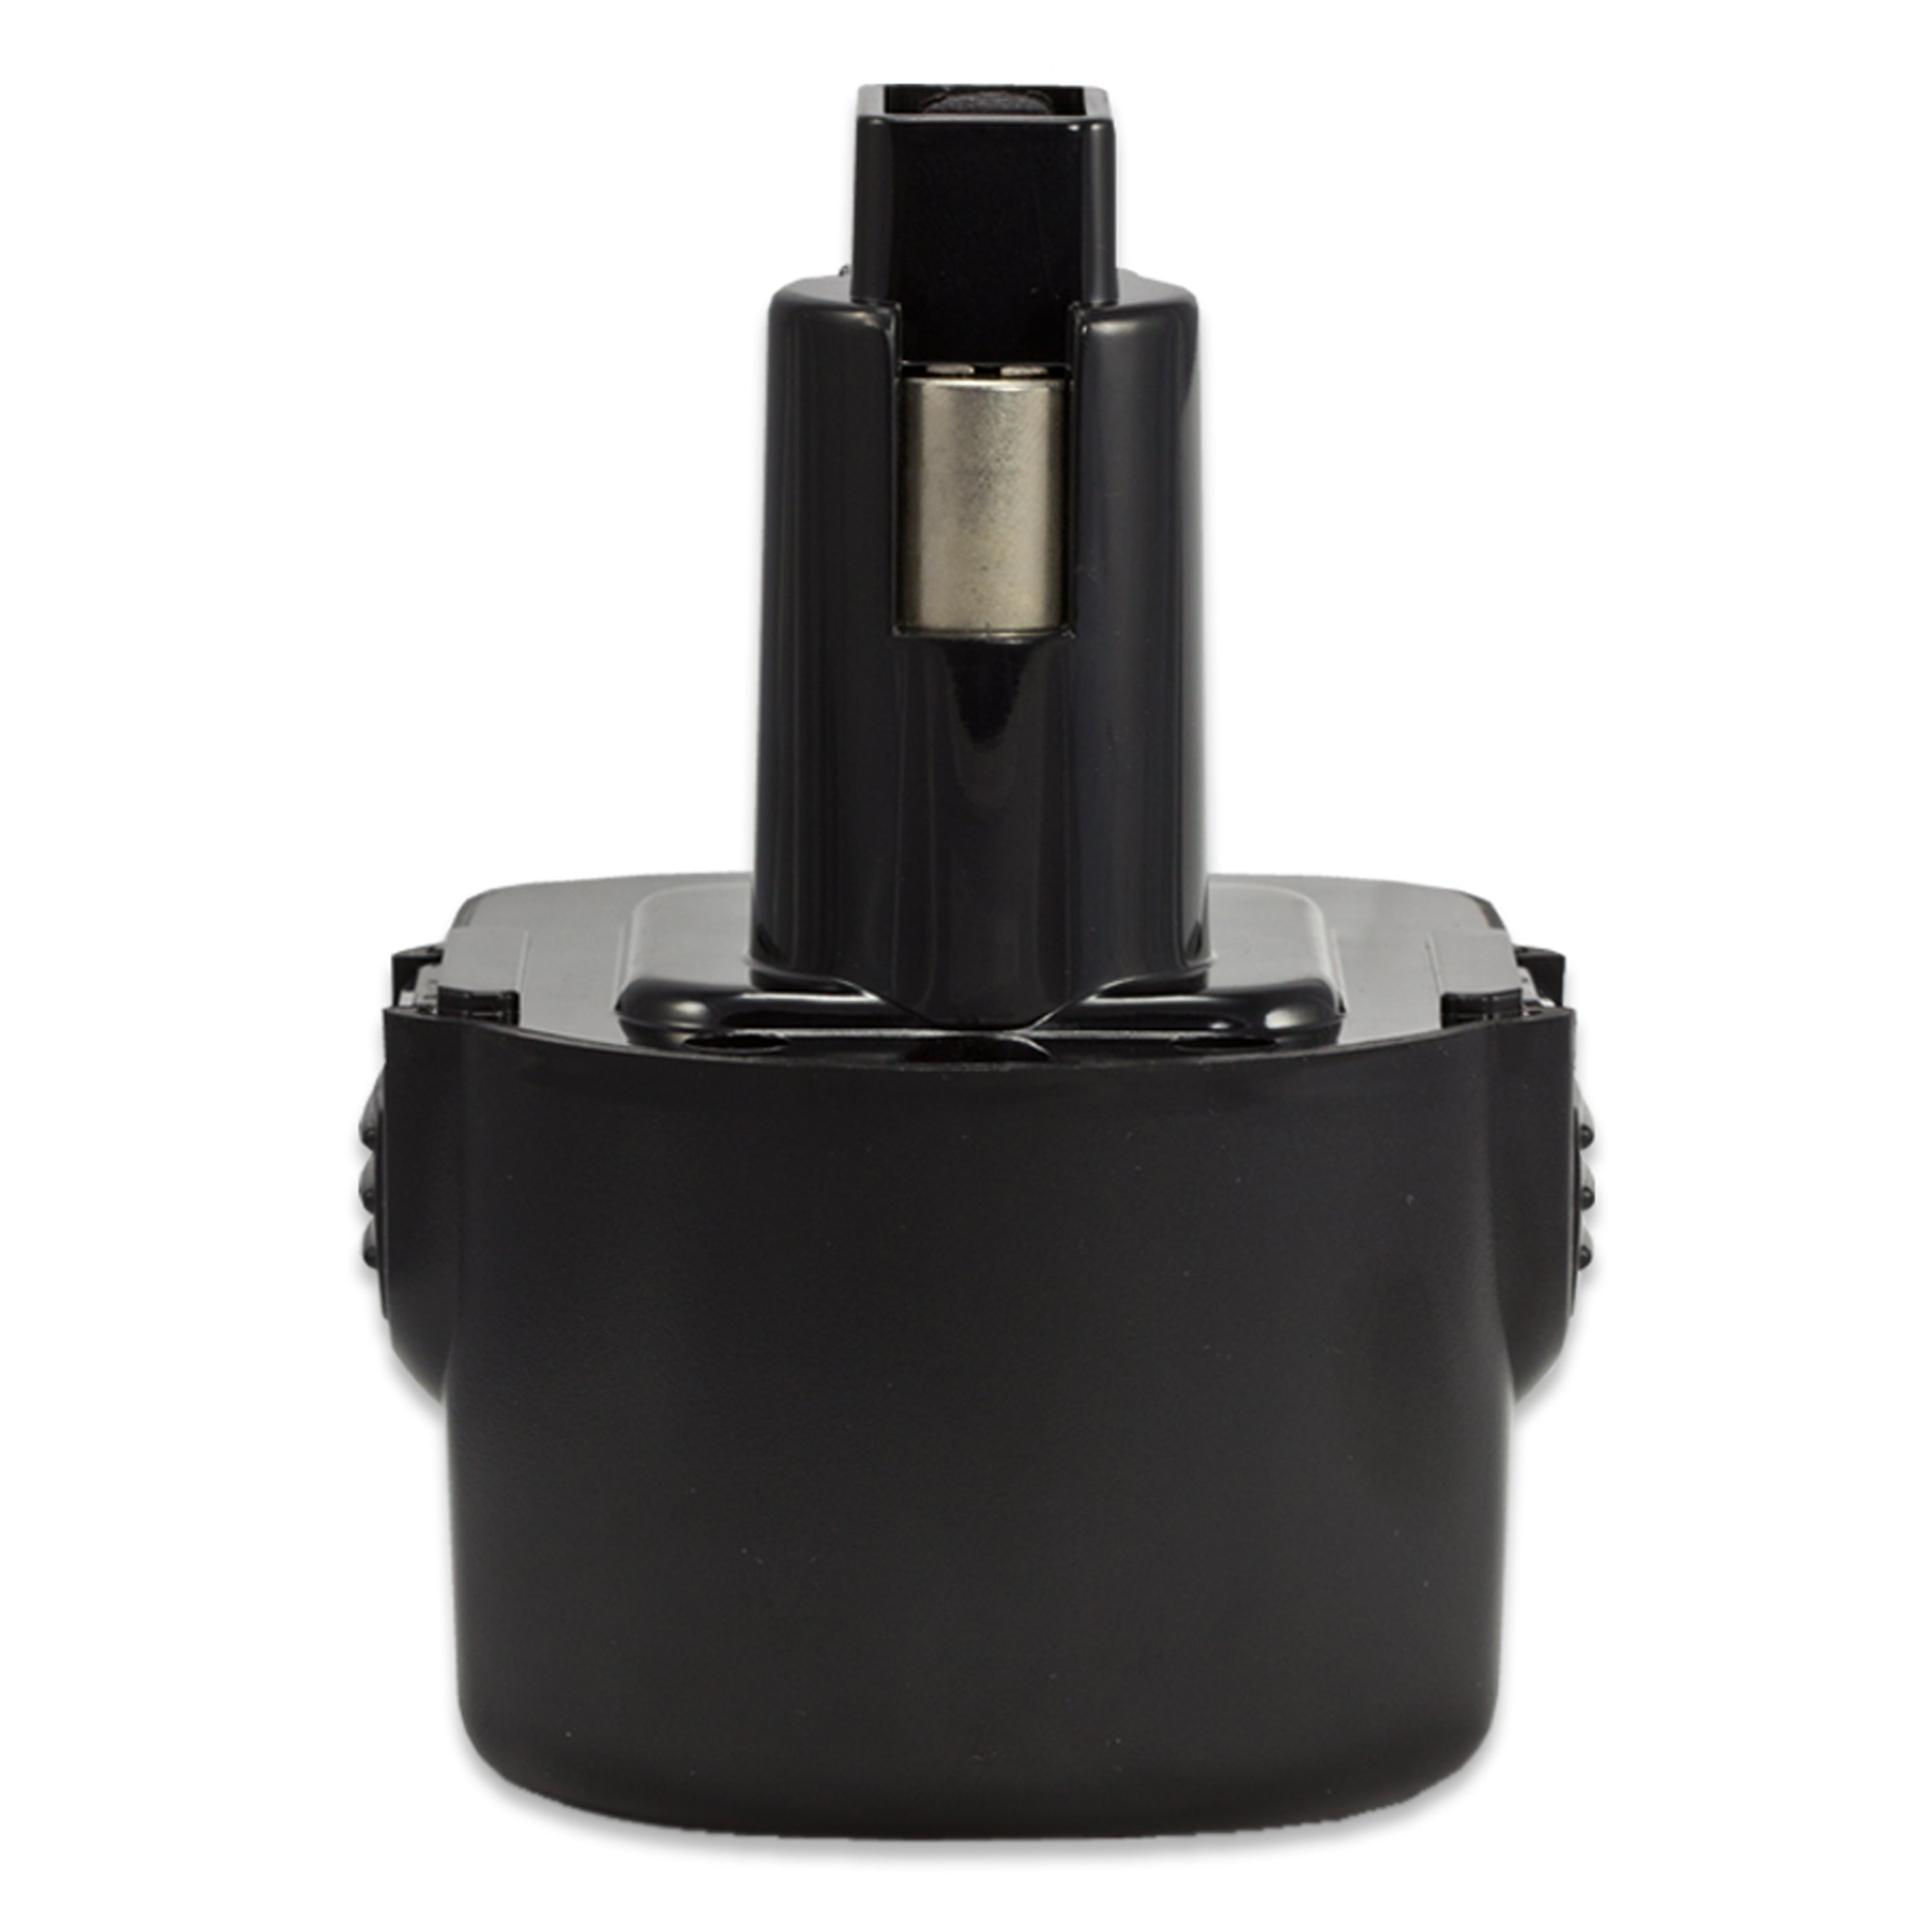 2x Black & Decker A9252 / PS130 batteries + charger (12 V, 2 Ah) -  BatteryUpgrade